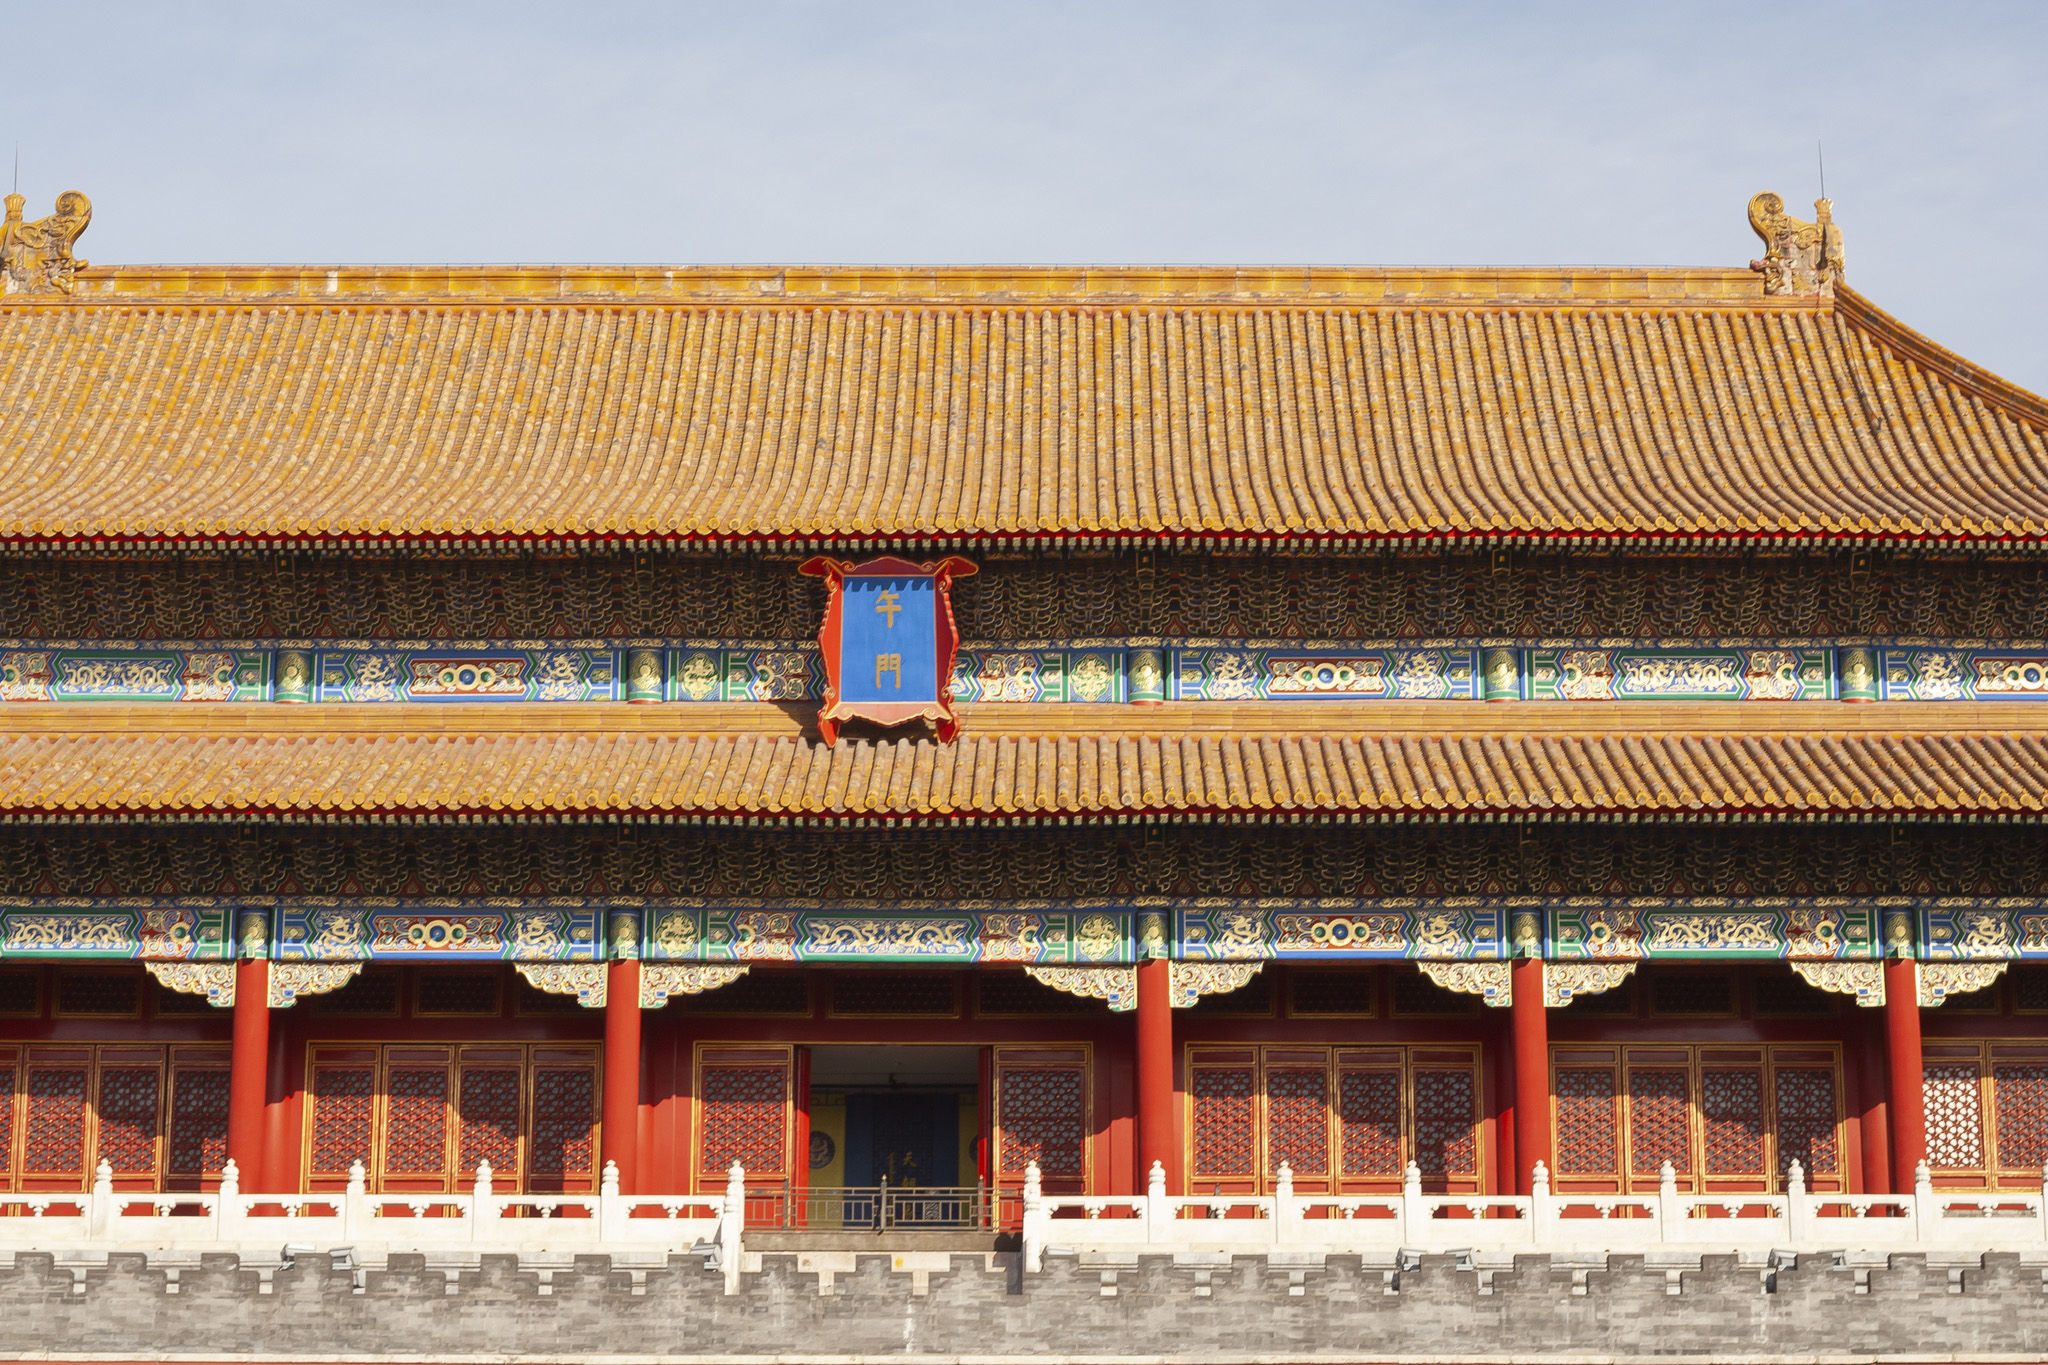 Meridian Gate, Forbidden City